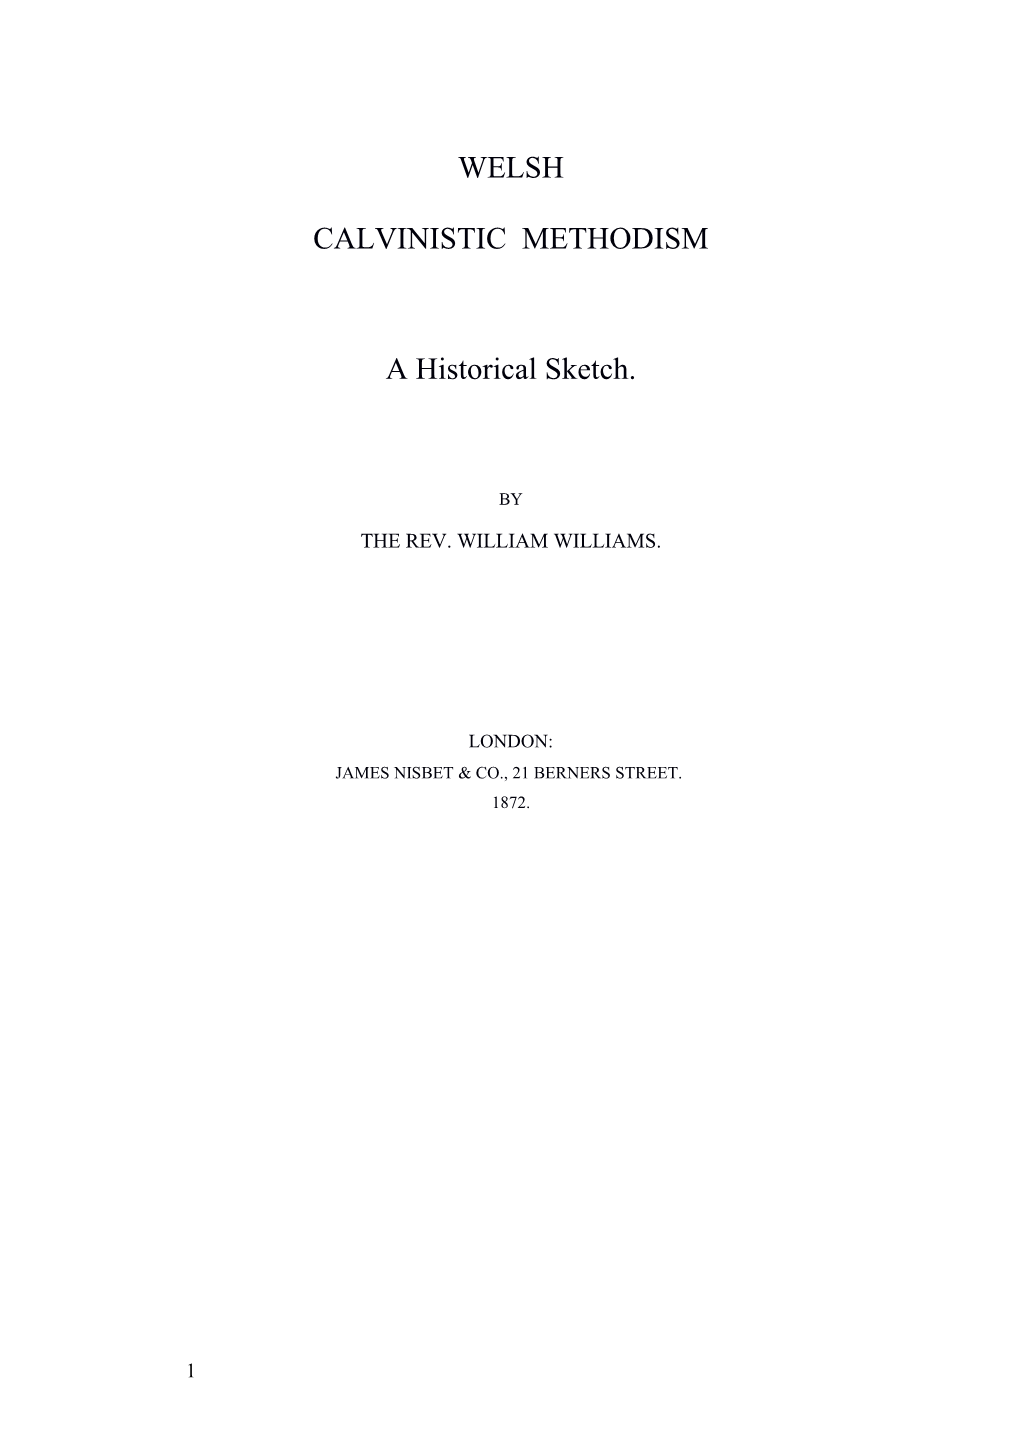 Welsh Calvinistic Methodism : a Historical Sketch